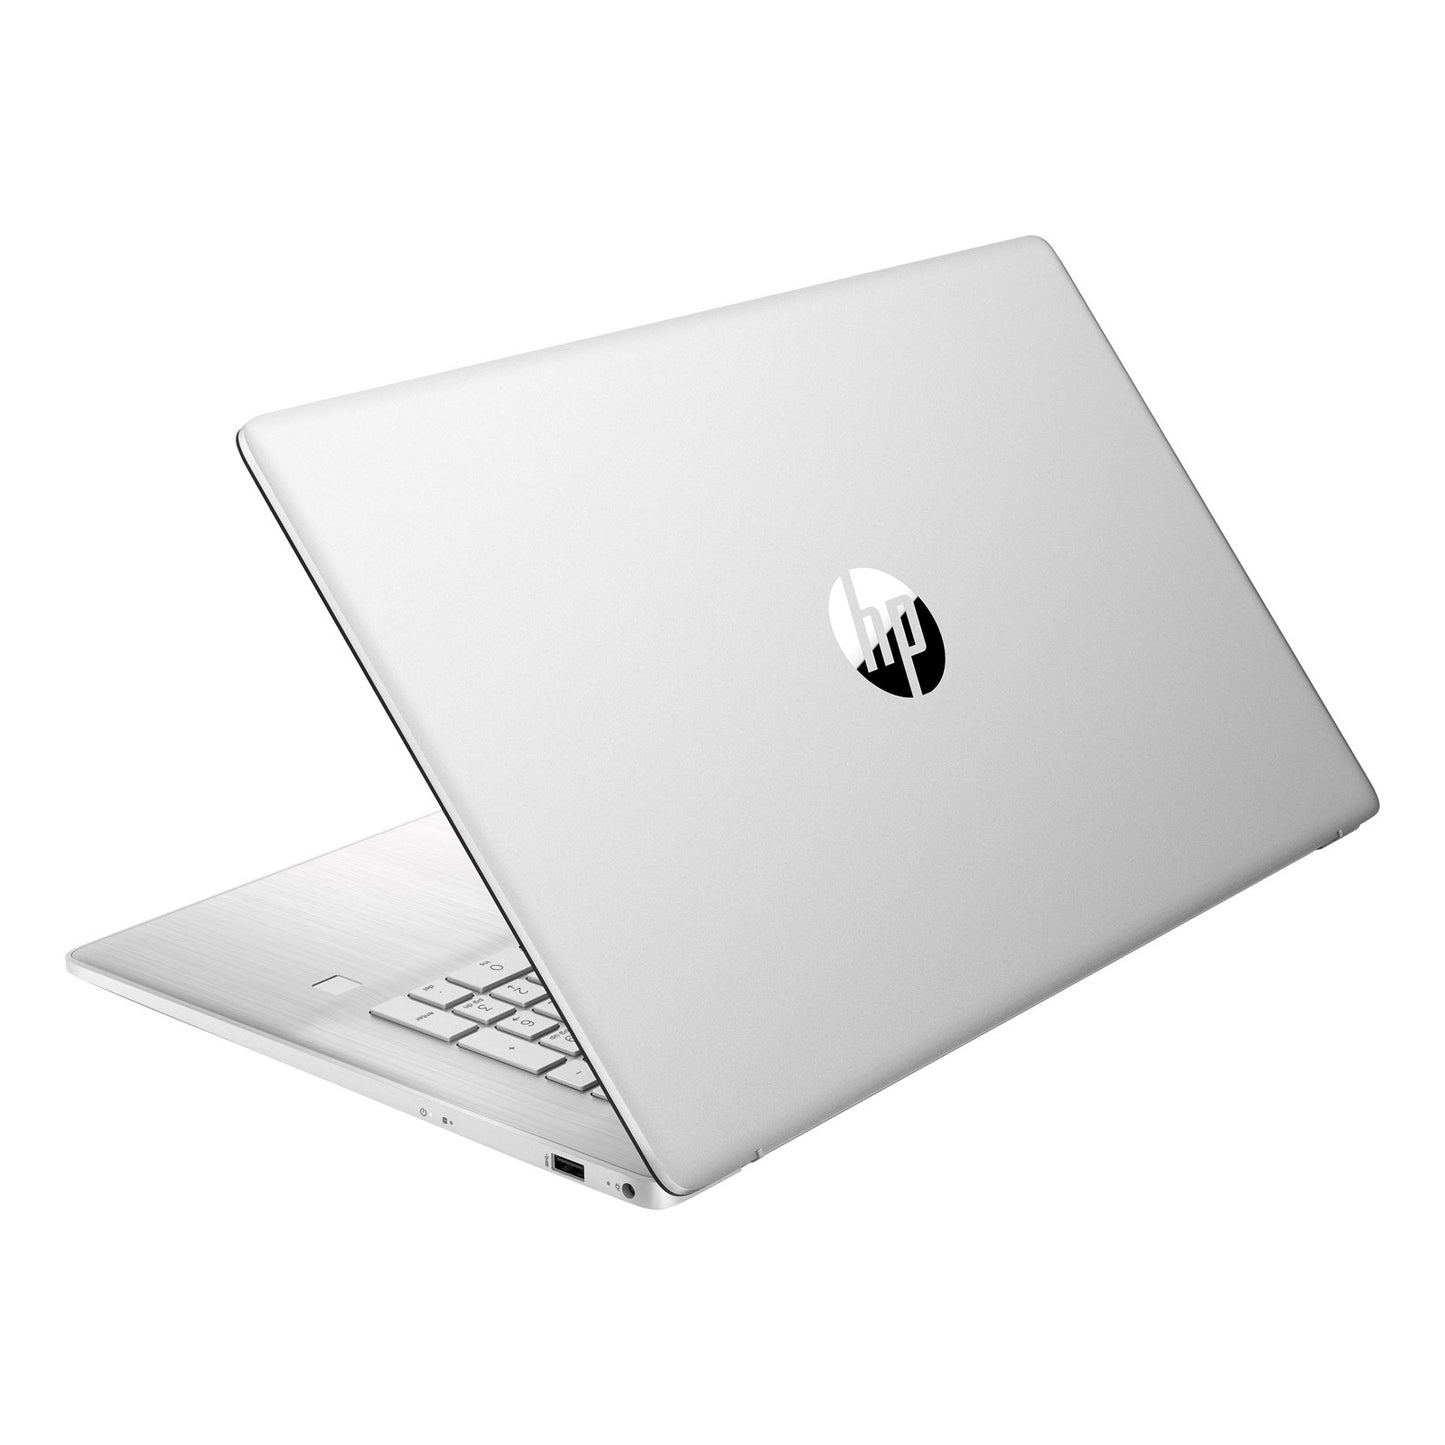 HP 17-CN2003CA Core i5-1235u Iris Xe 17.3" Laptop (New OB)